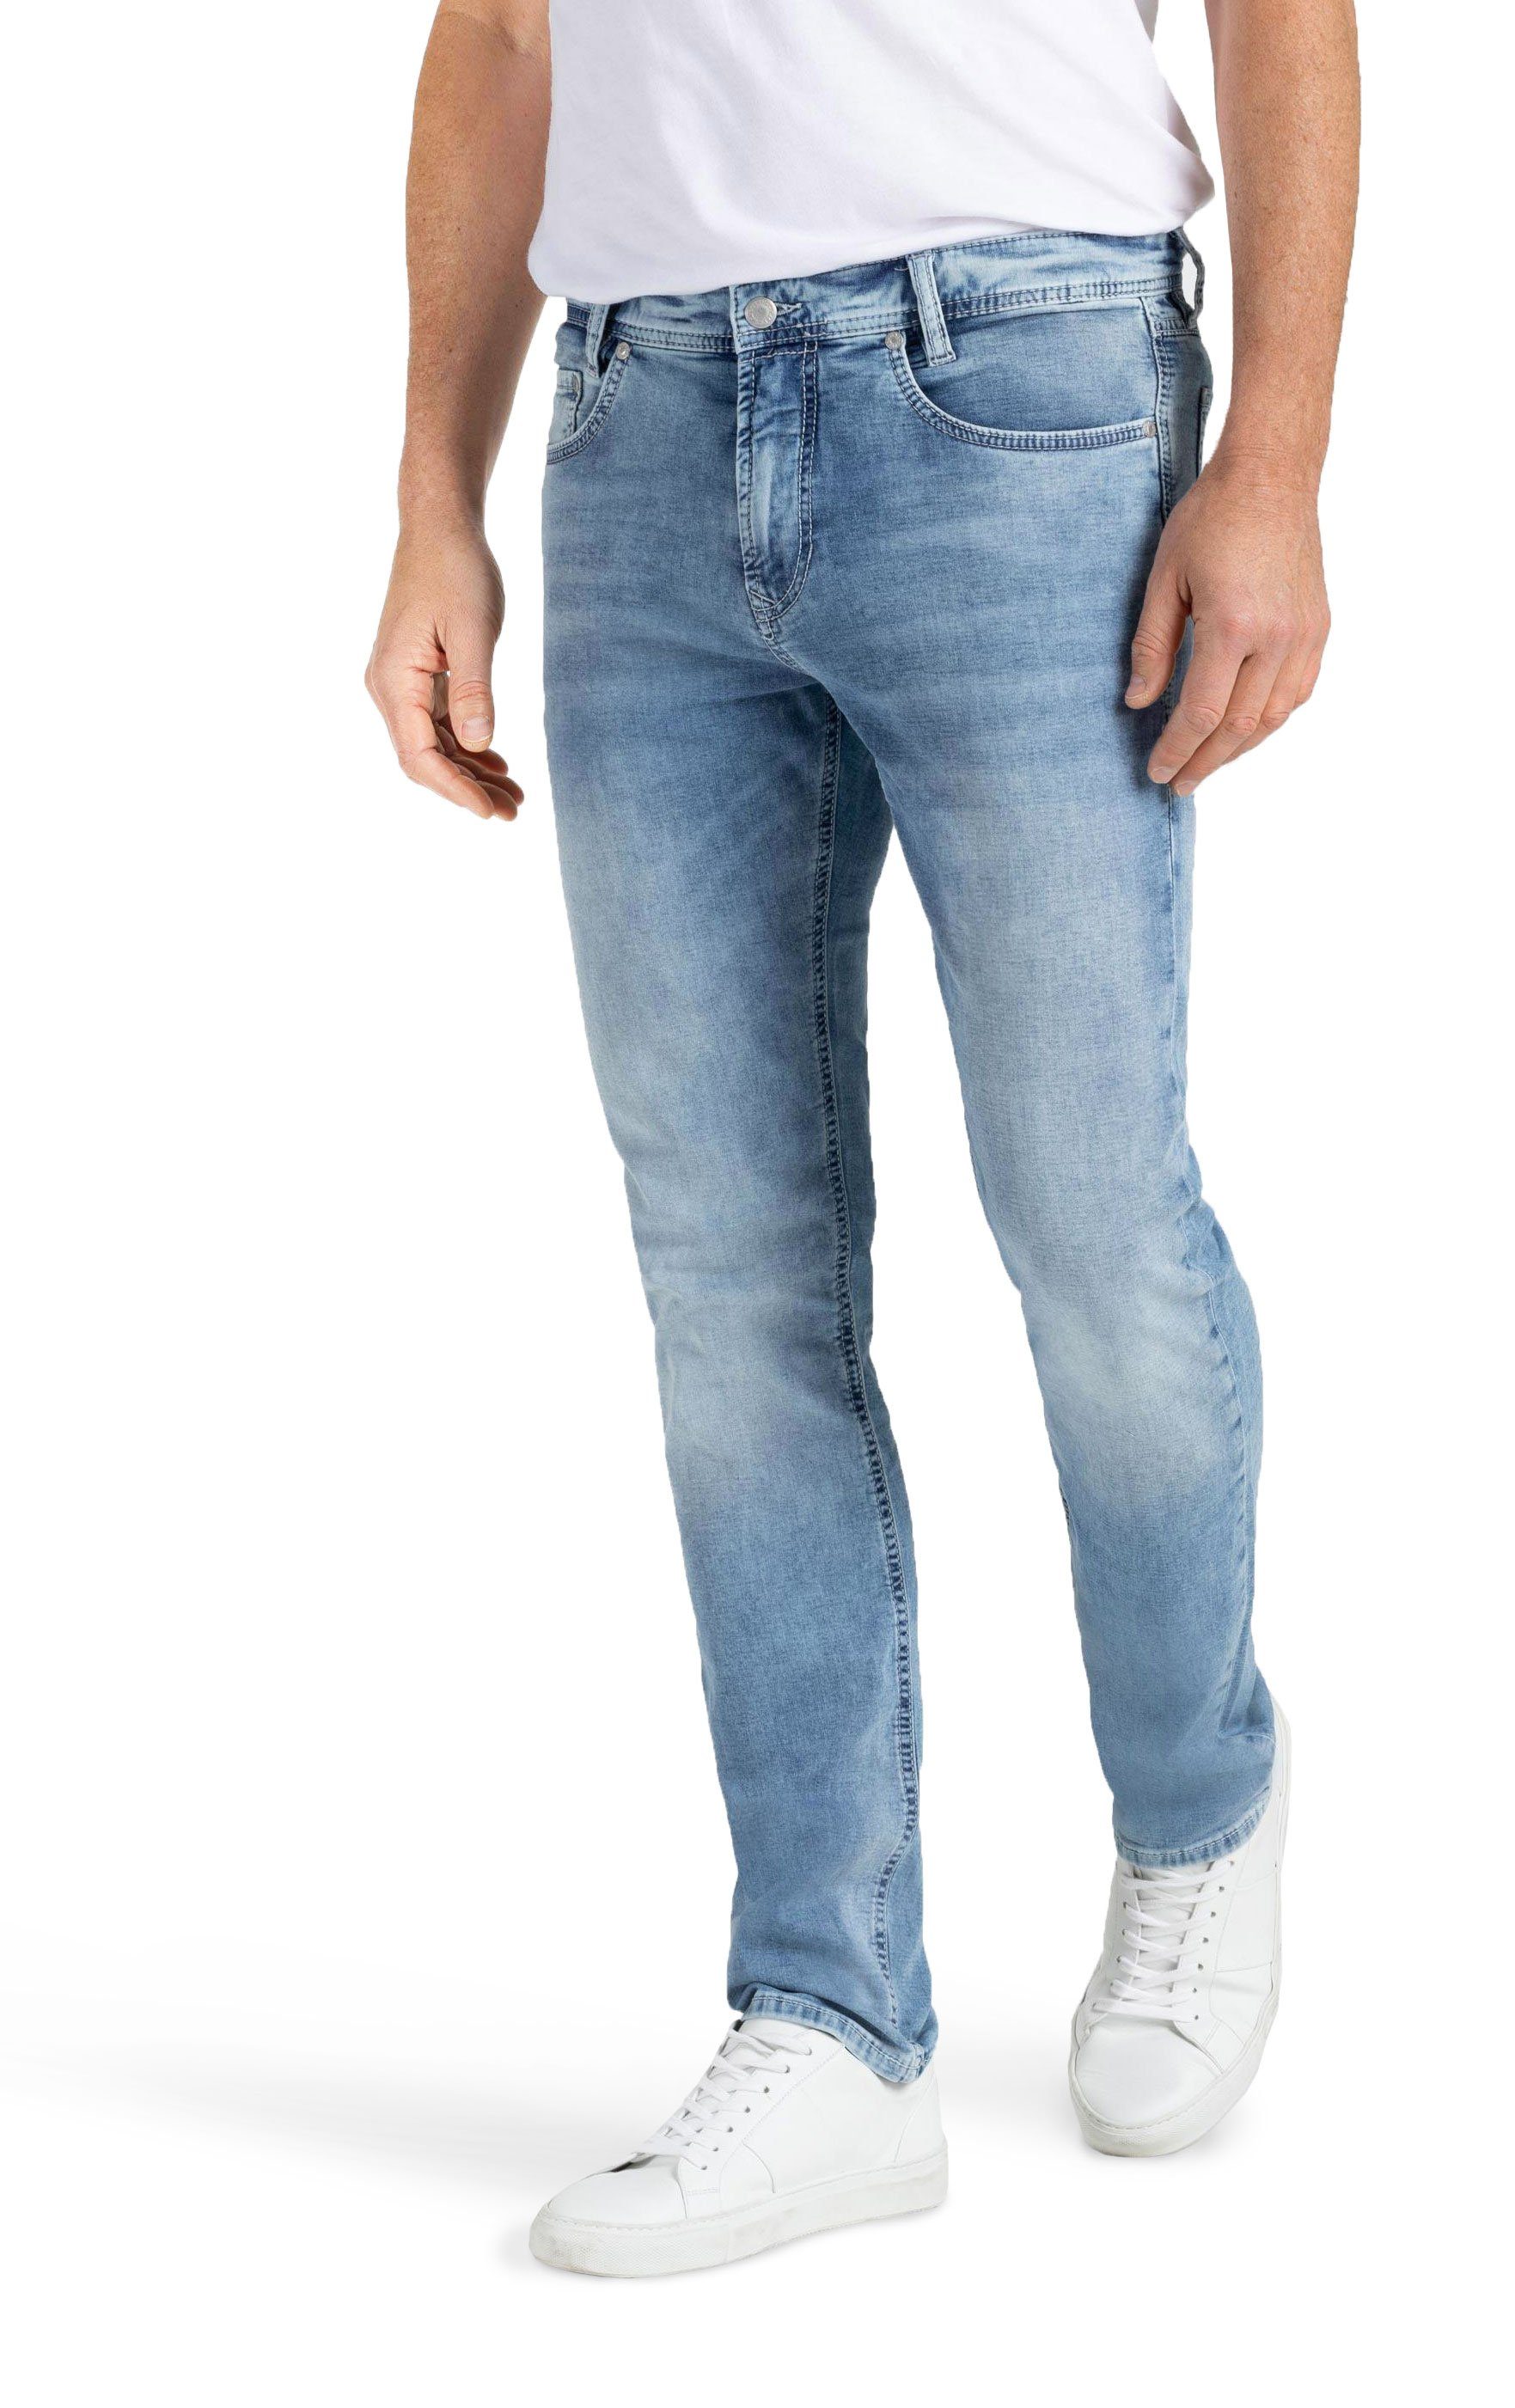 MAC 5-Pocket-Jeans Jog'n Authentic H230 Jeans Light Sweat Blue 0994L Denim Light Sky